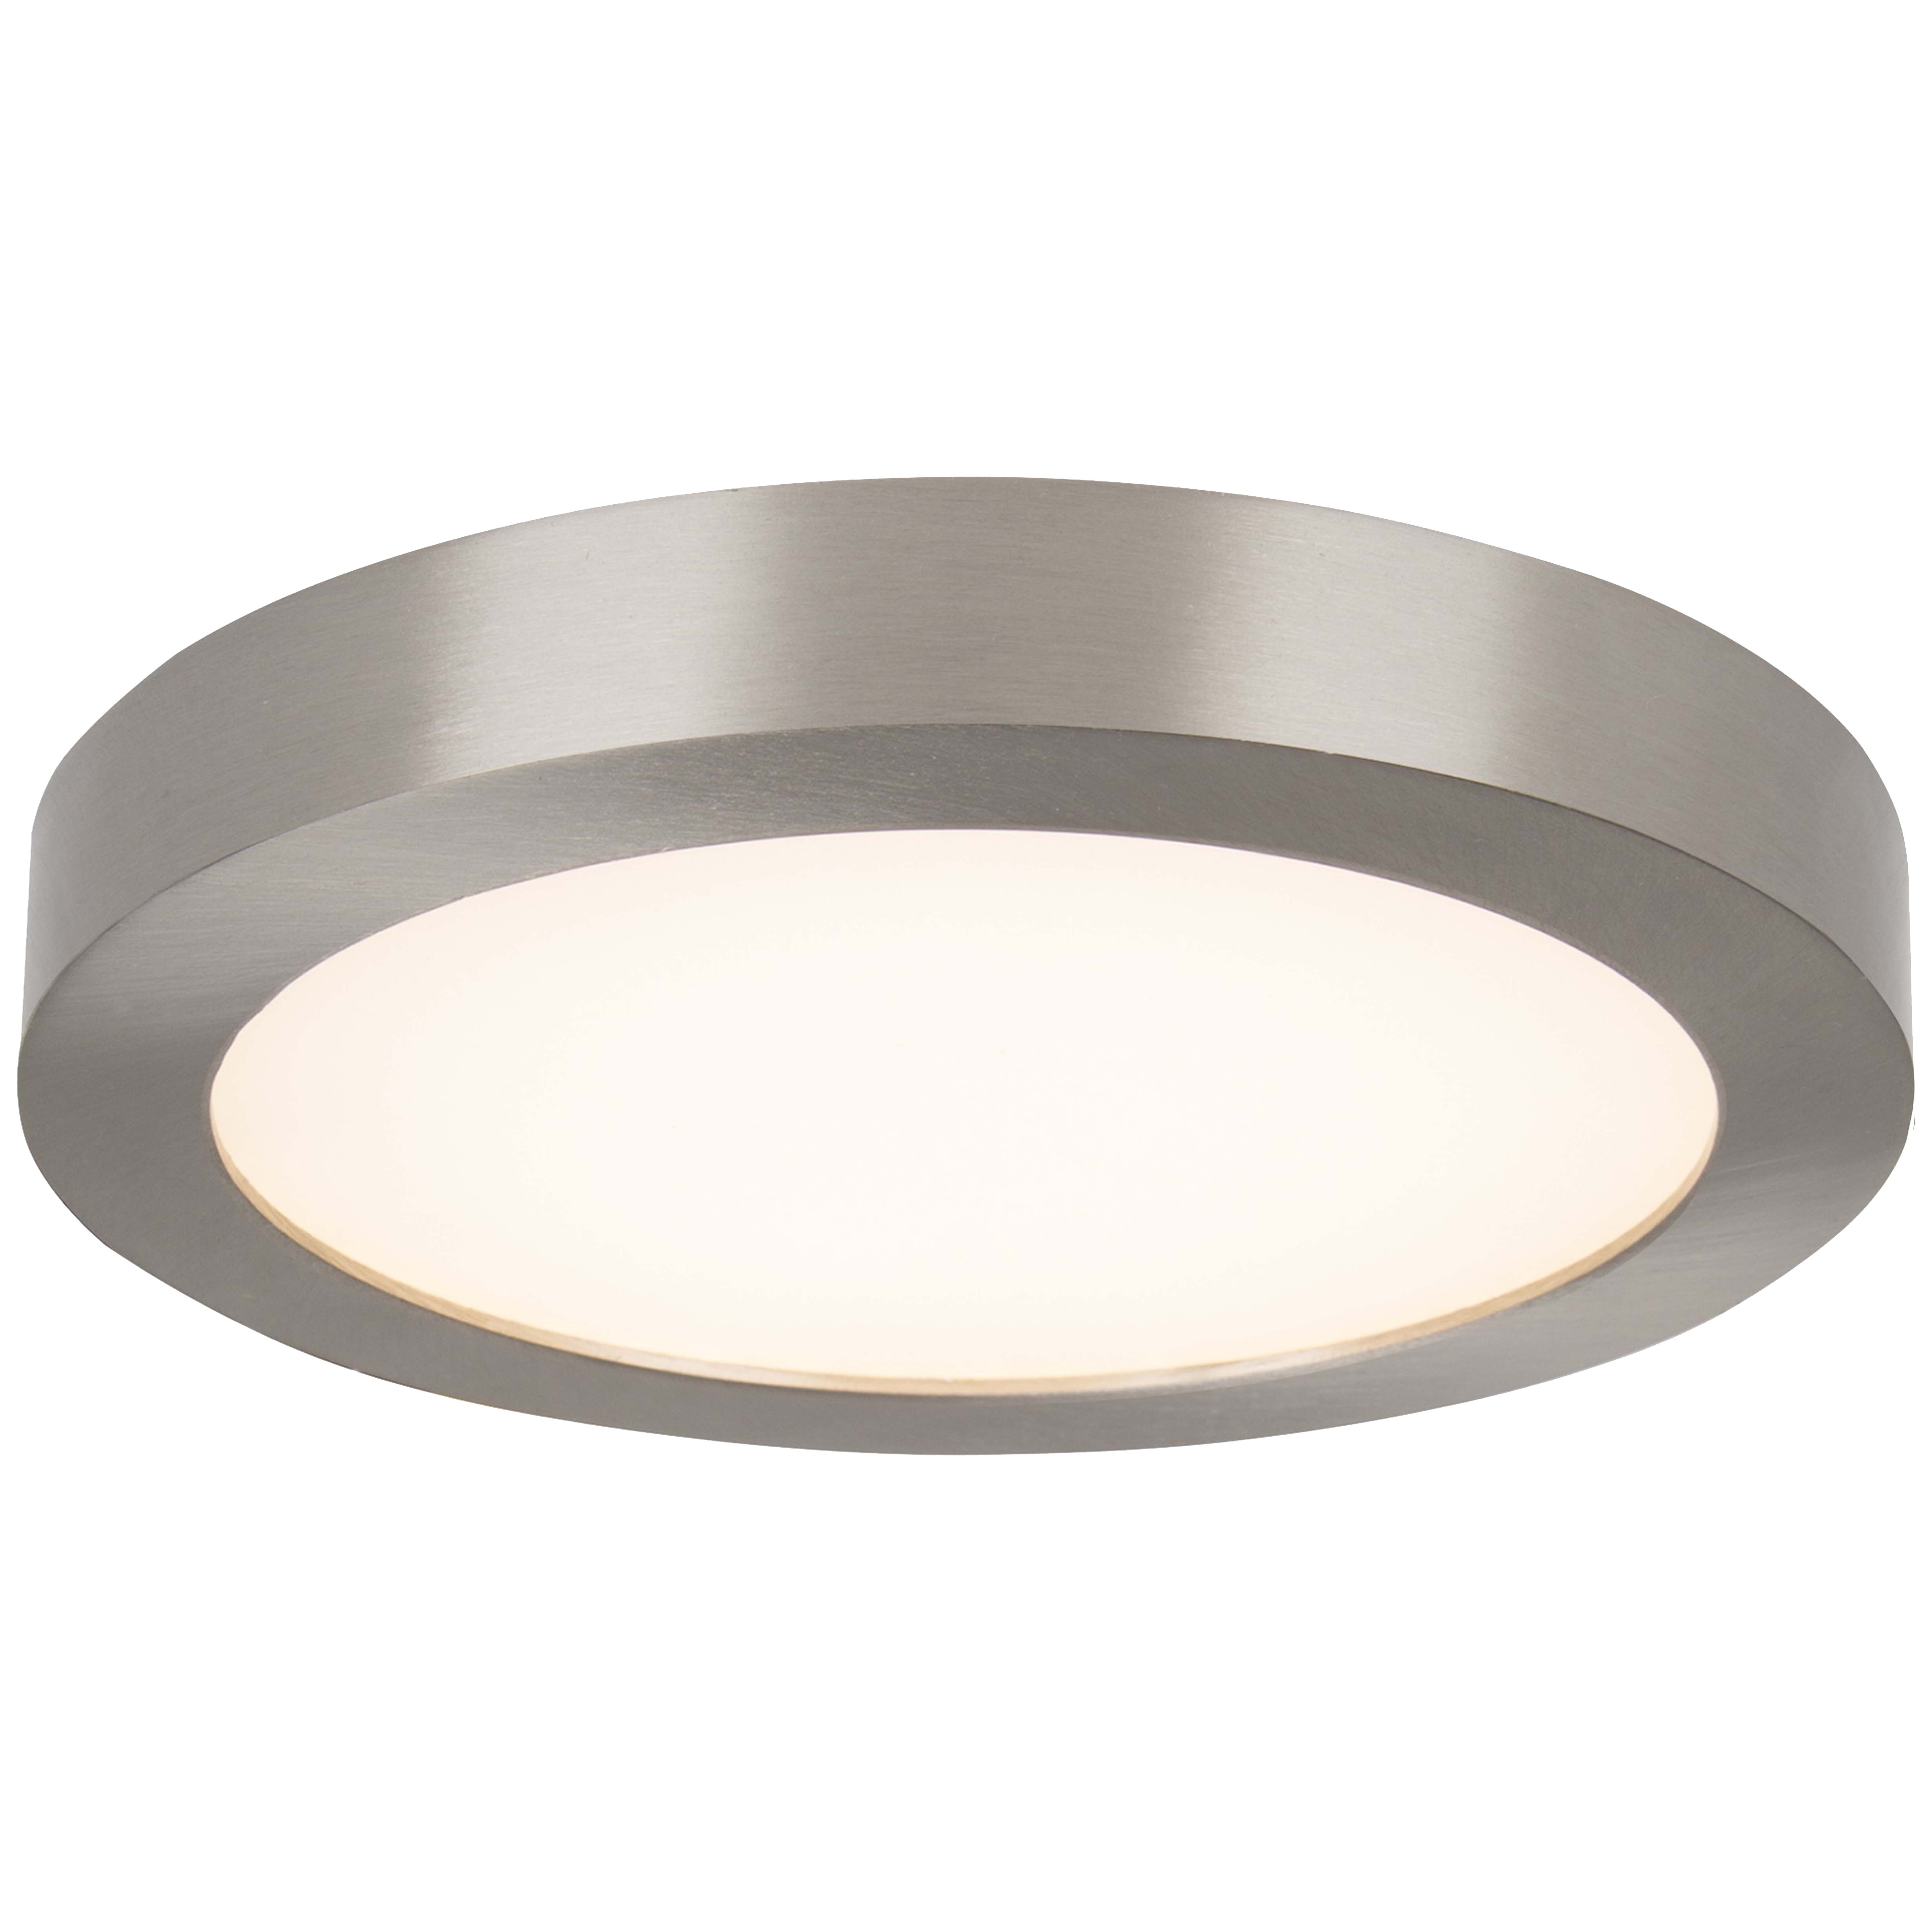 CL040B BN Ceiling Light Fixture, 0.1 A, 120 V, 10 W, LED Lamp, 750 Lumens, 3000 K Color Temp